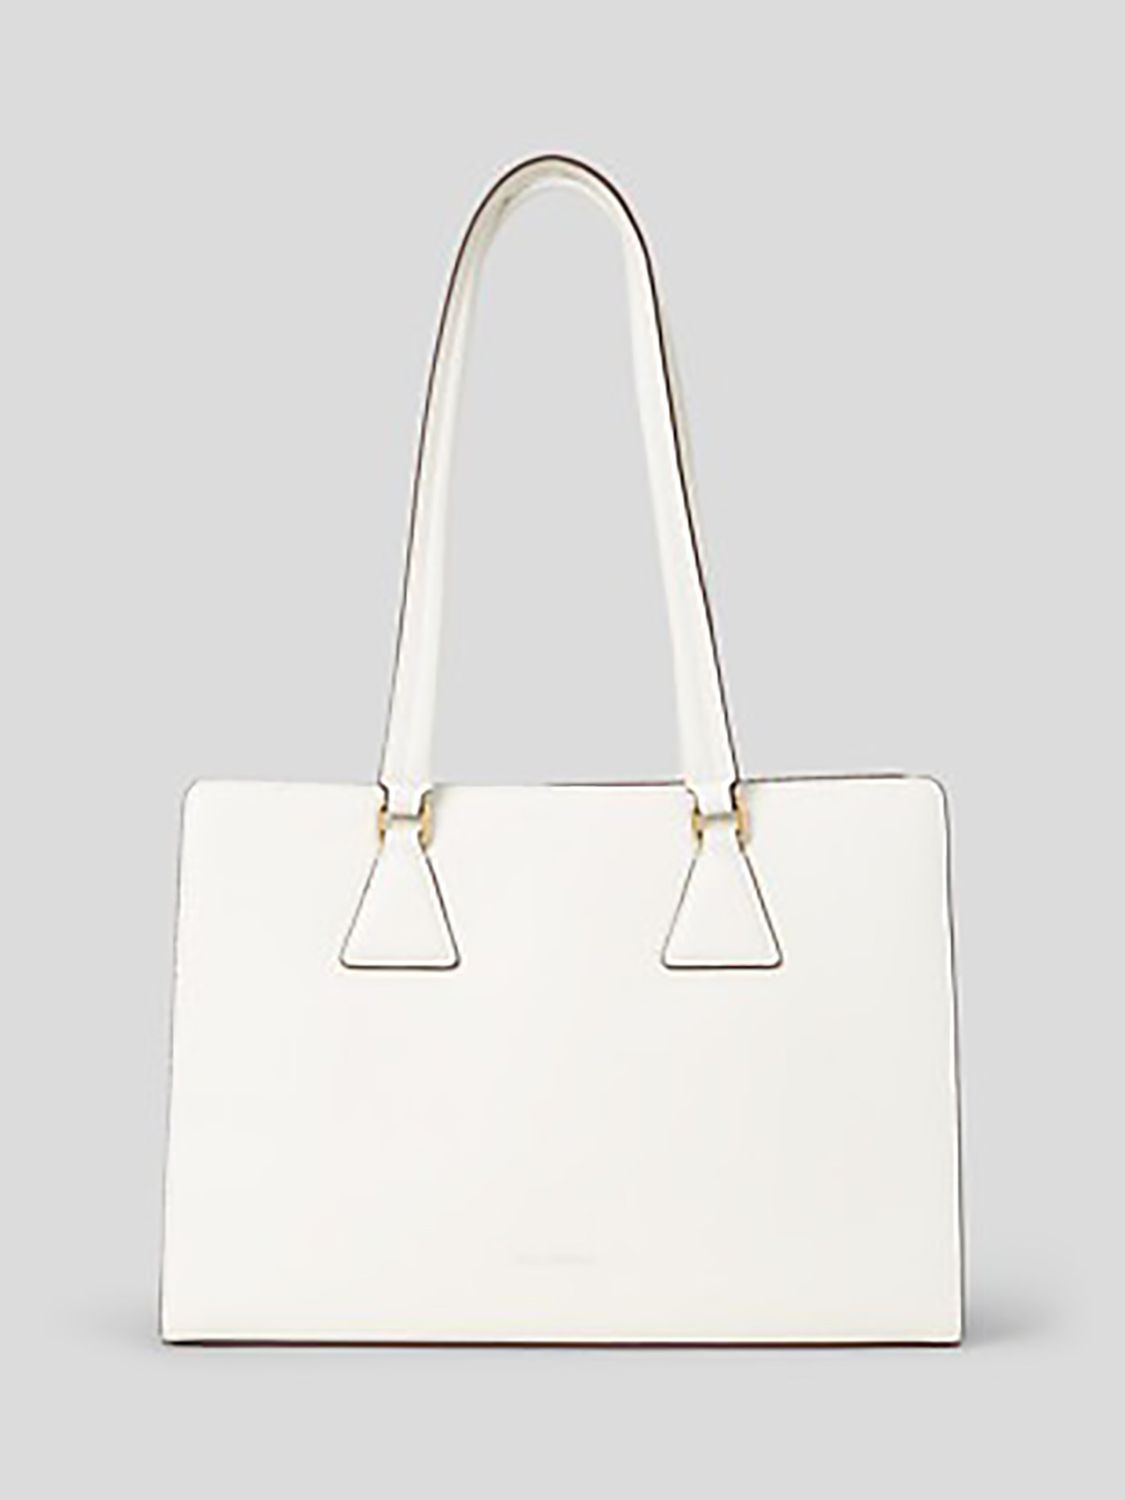 KARL LAGERFELD K/Lock Medium Leather Tote Bag, Off White, One Size